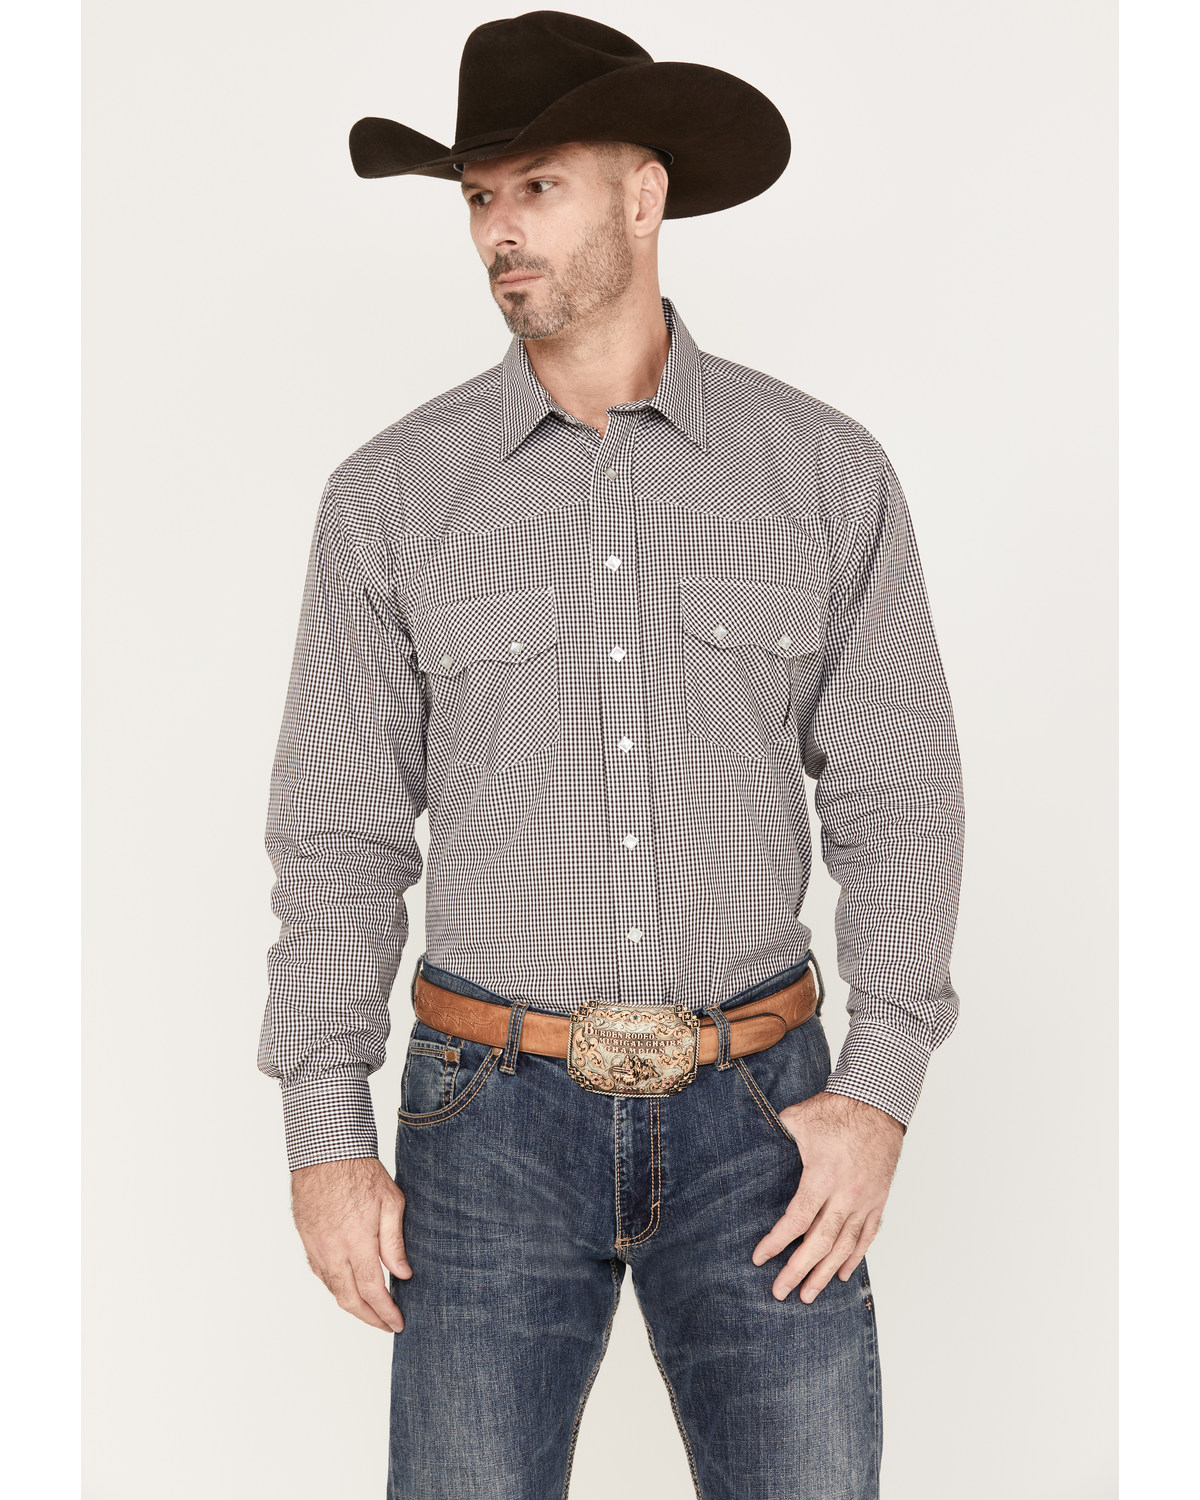 Resistol Men's Porter Mini Checkered Print Long Sleeve Snap Western Shirt